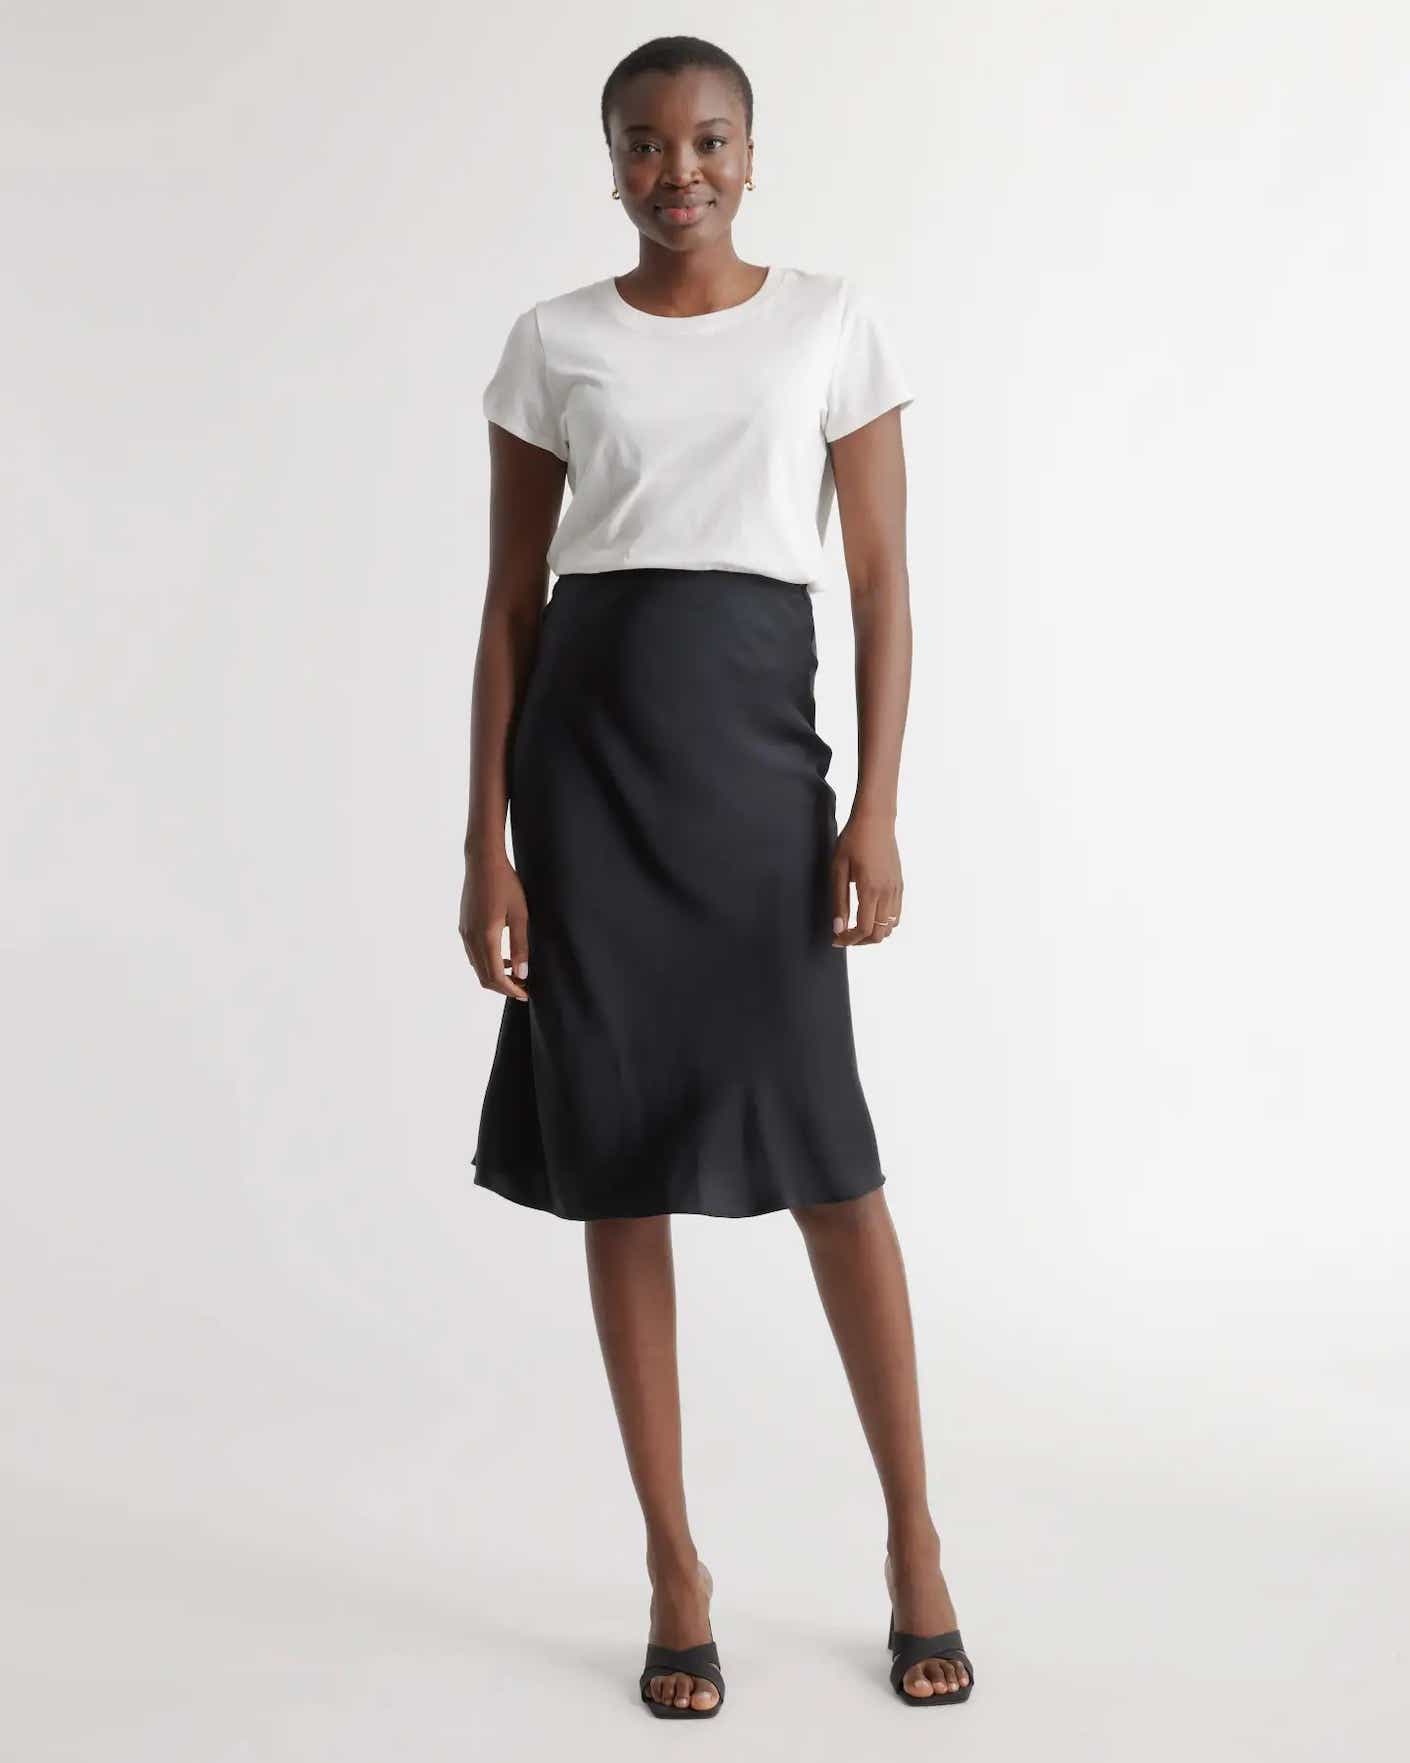 A woman wears a black, tea length skirt that is simply cut.